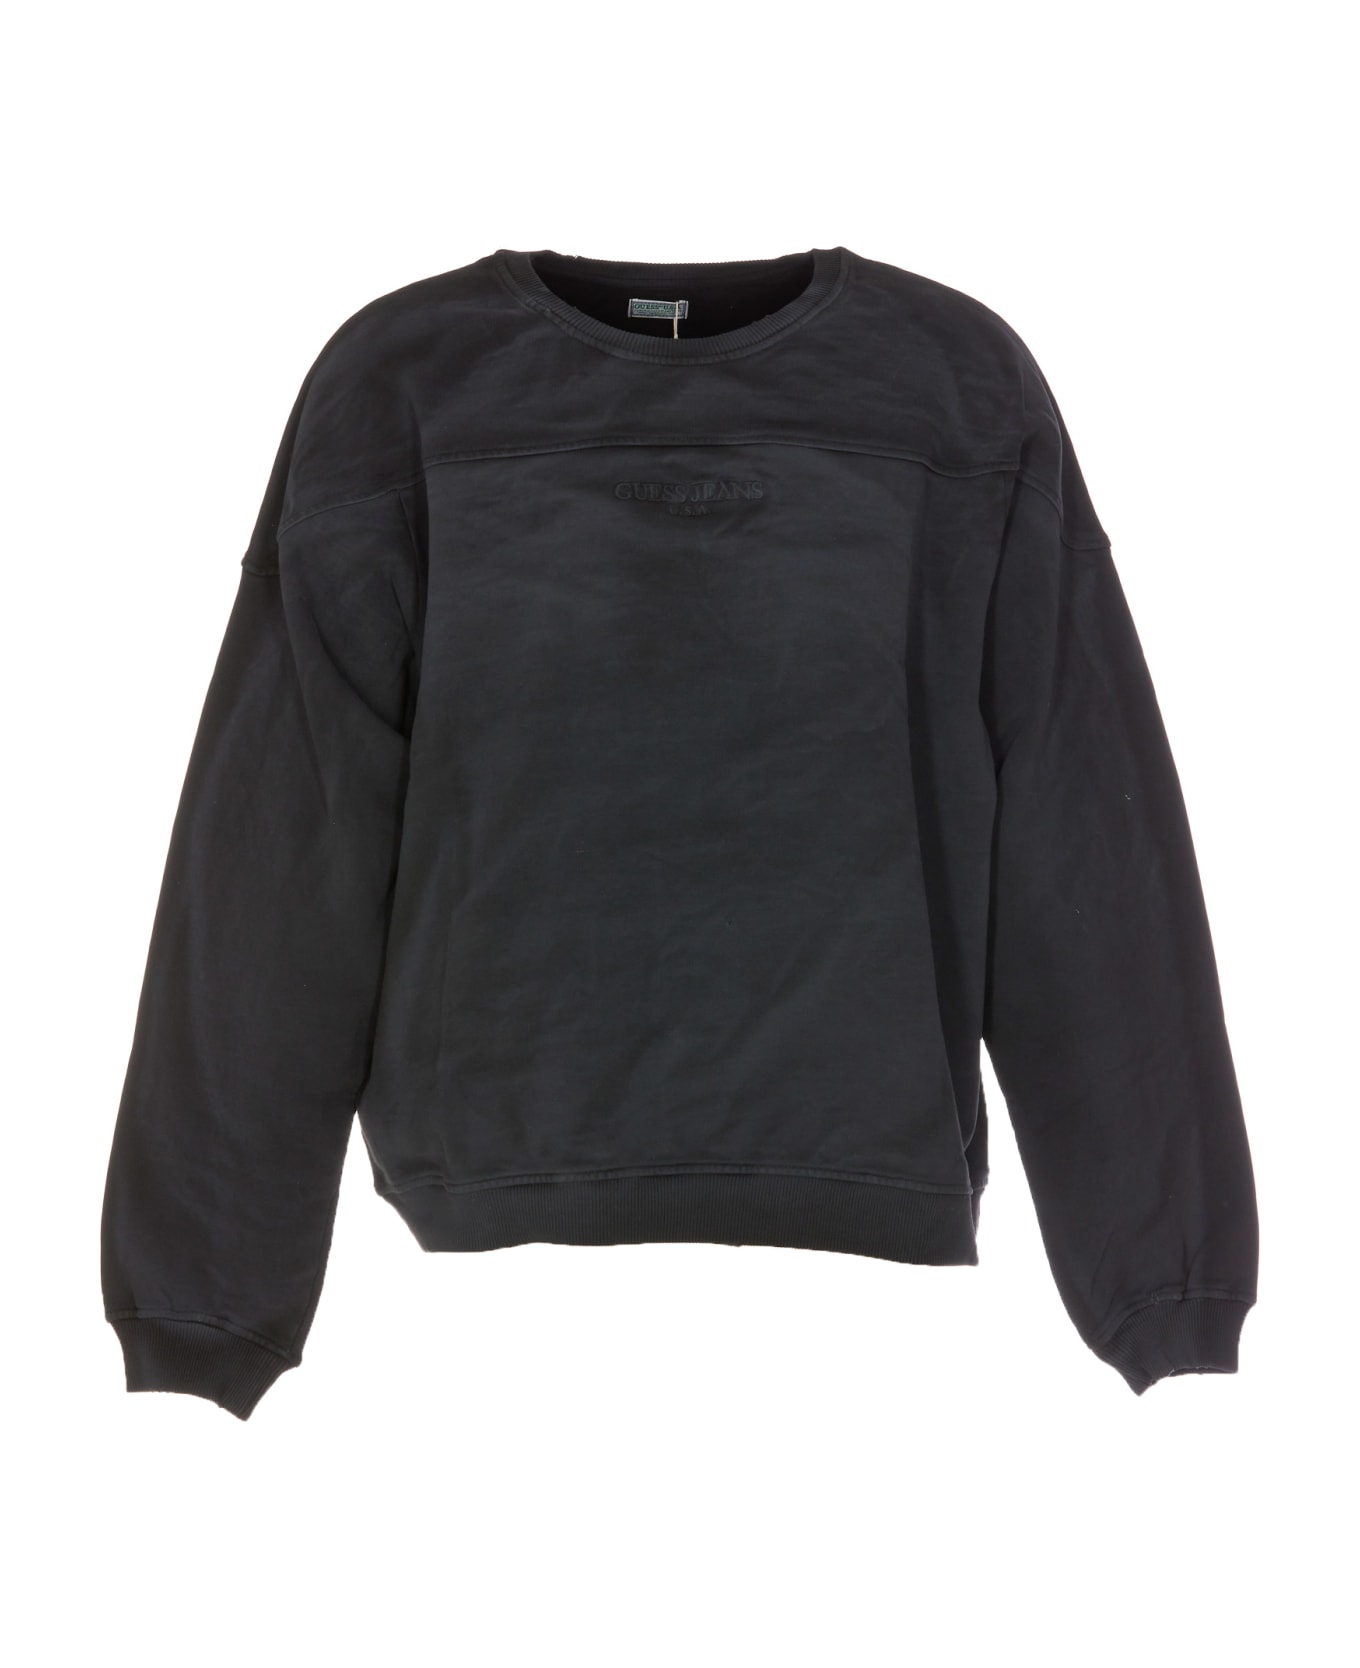 Guess Sweatshirt - BLACK